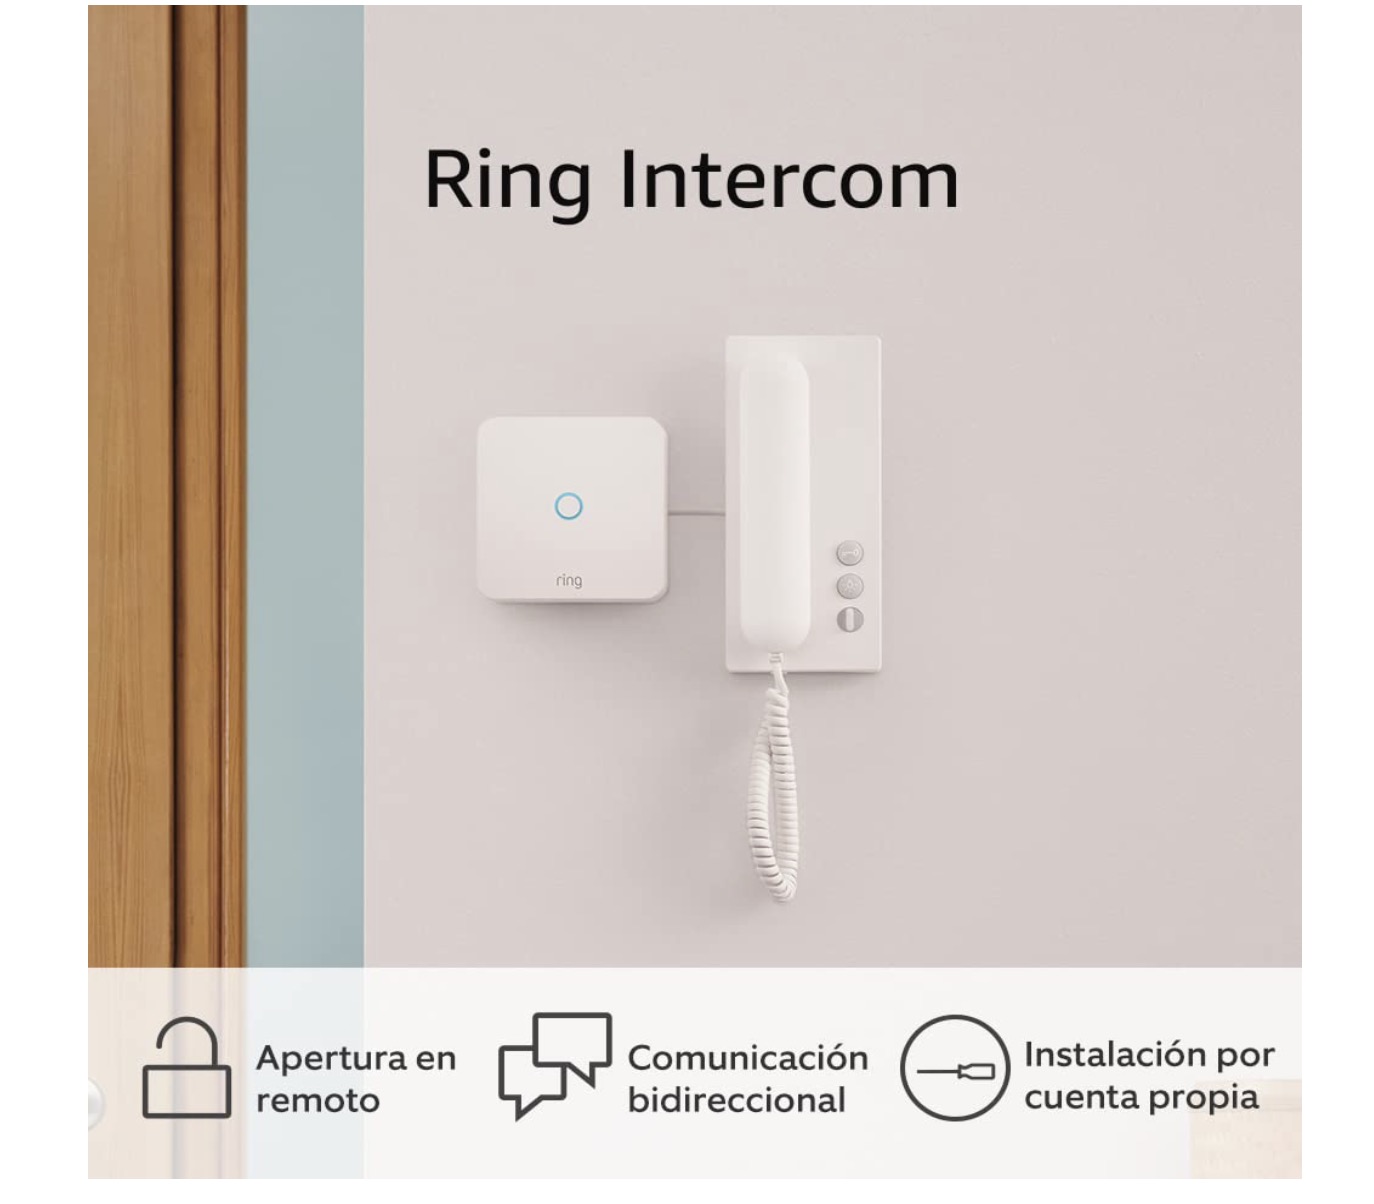 Ring Intercom de Amazon